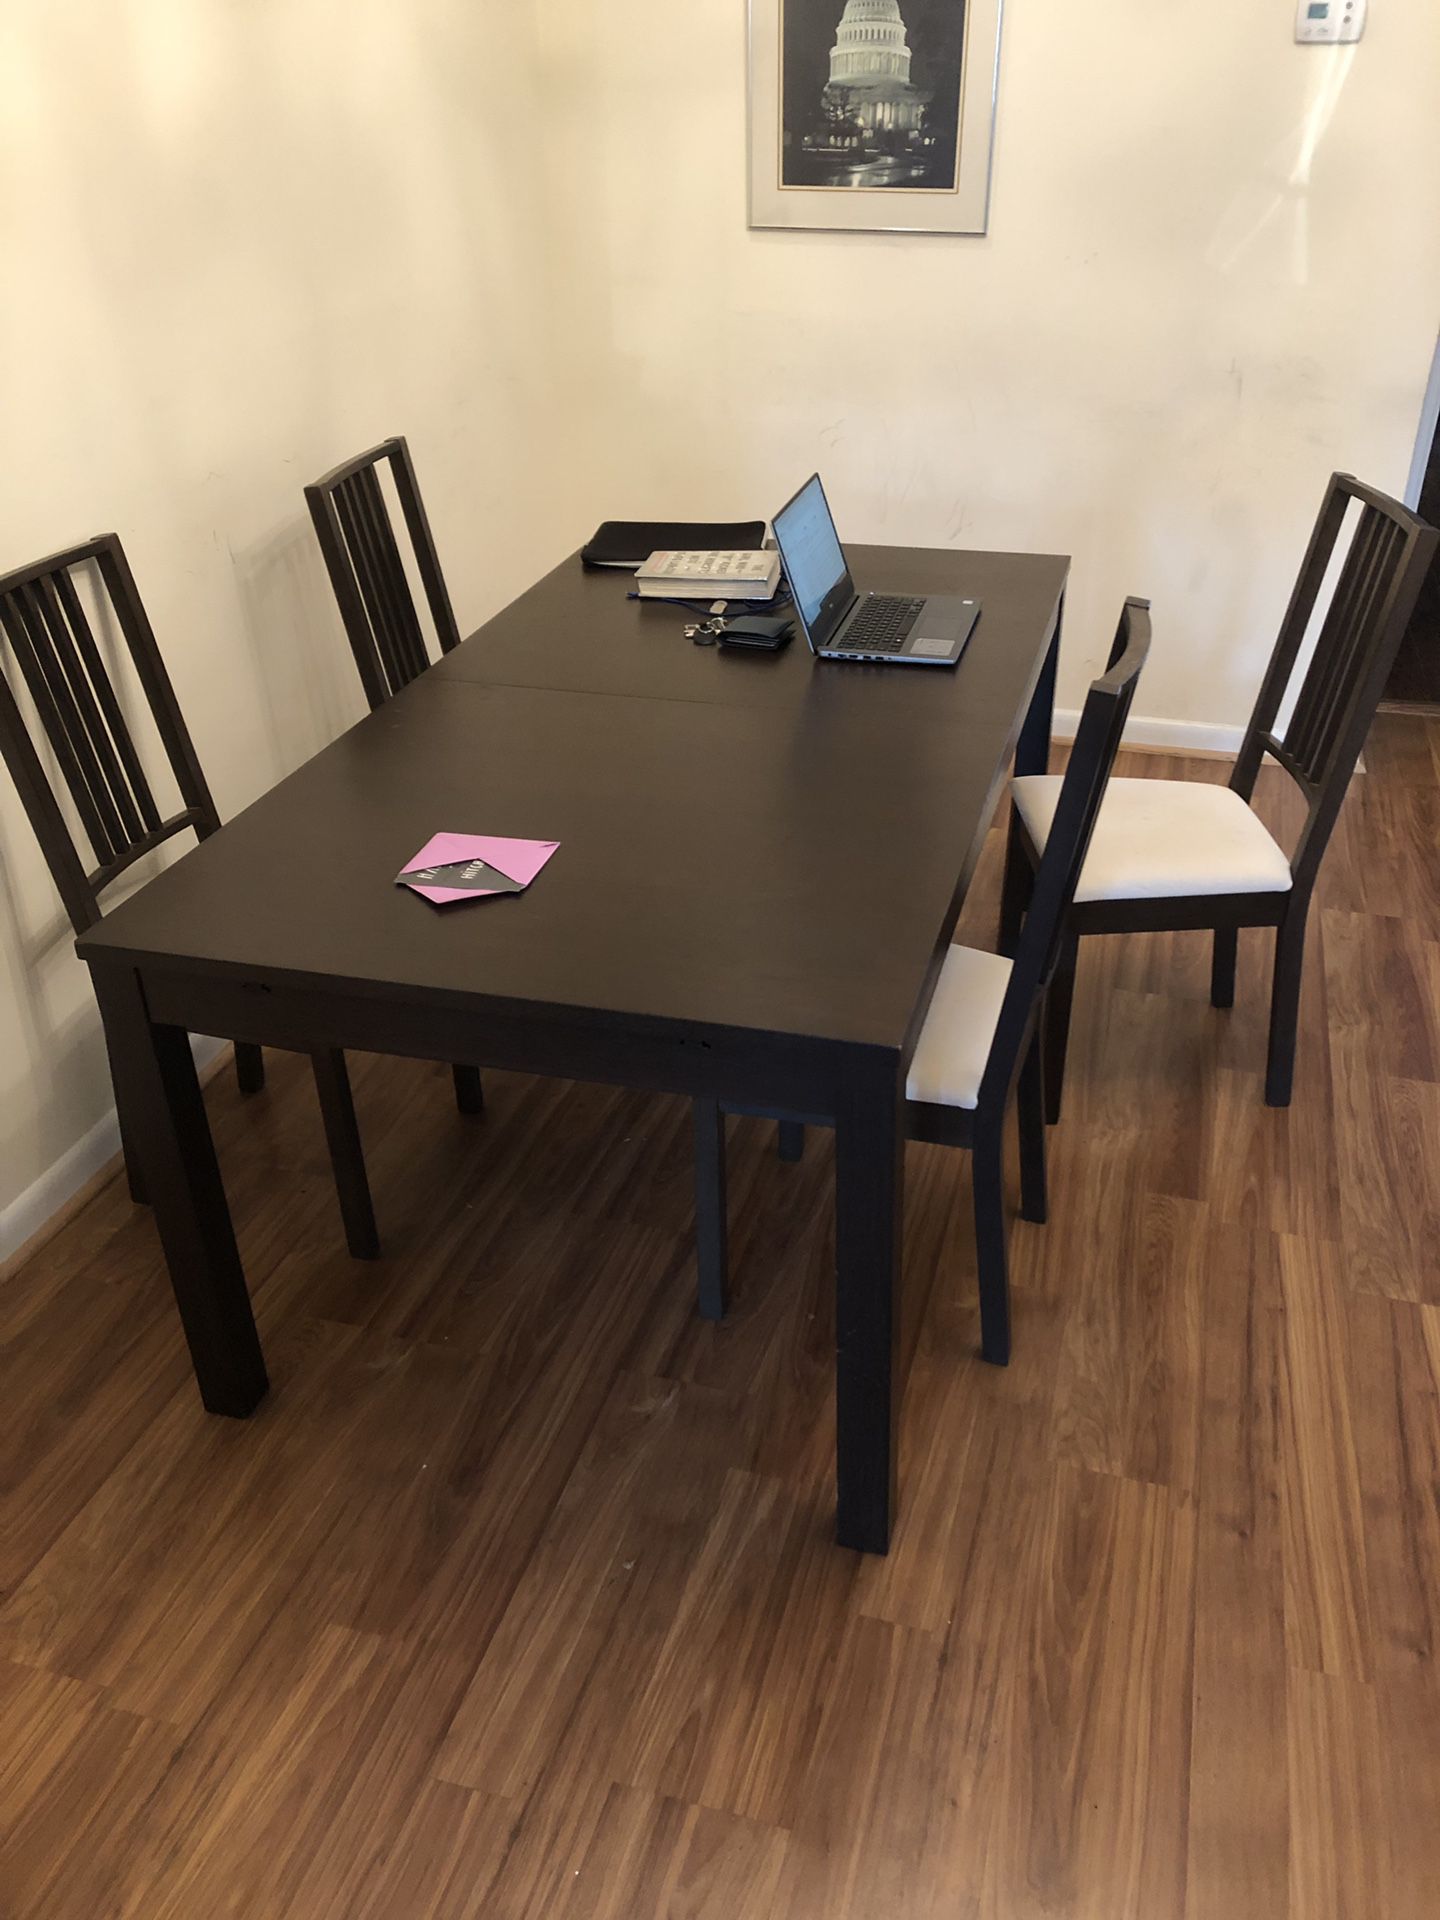 Dining room set for sale - $125